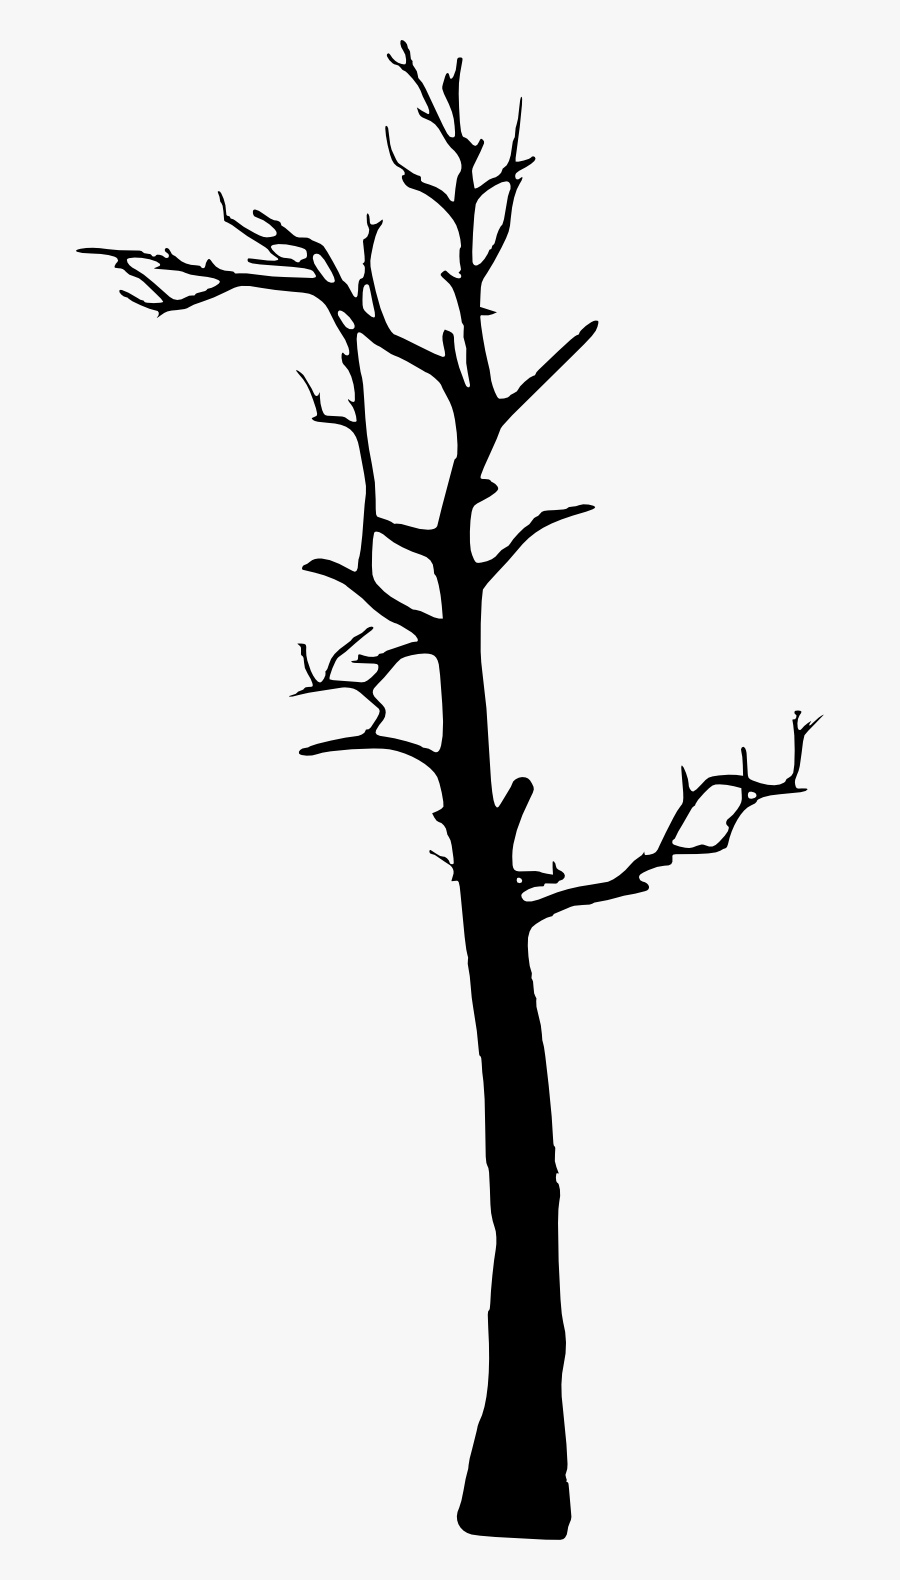 17 Dead Tree Silhouette Png Transparent Clipart , Png - Silhouette Of Dry Trees, Transparent Clipart